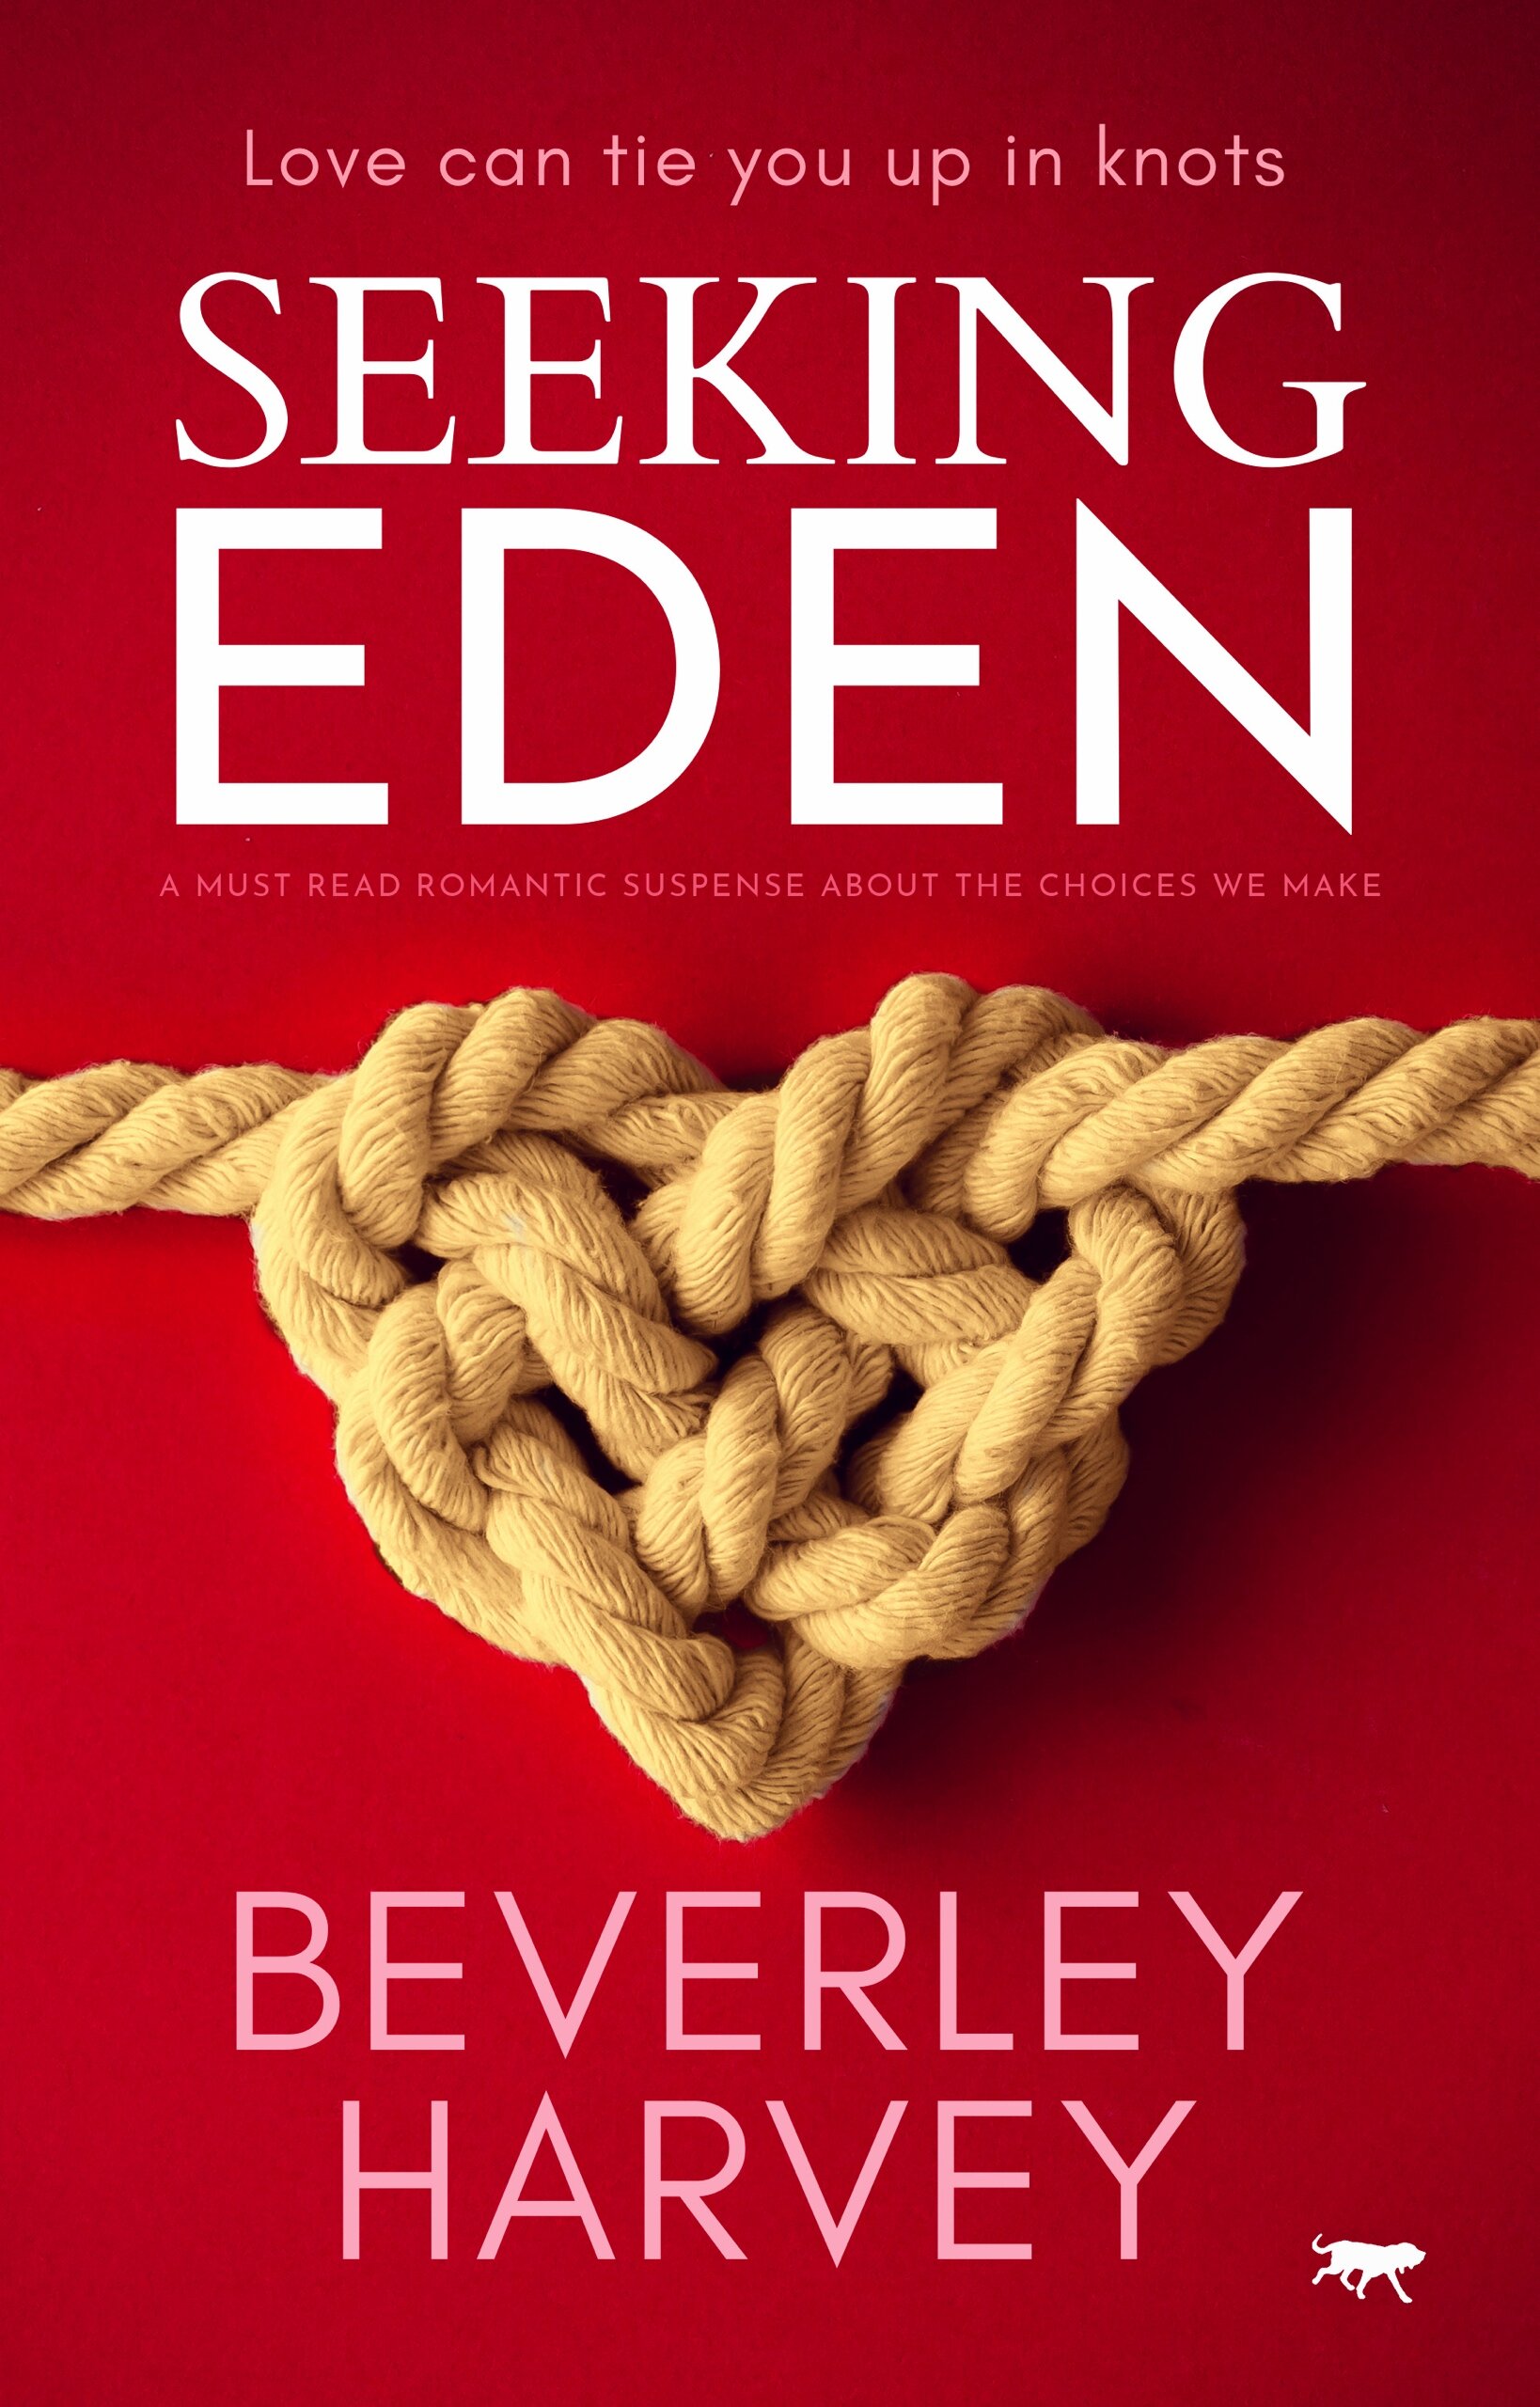 Seeking-Eden-Kindle.jpg